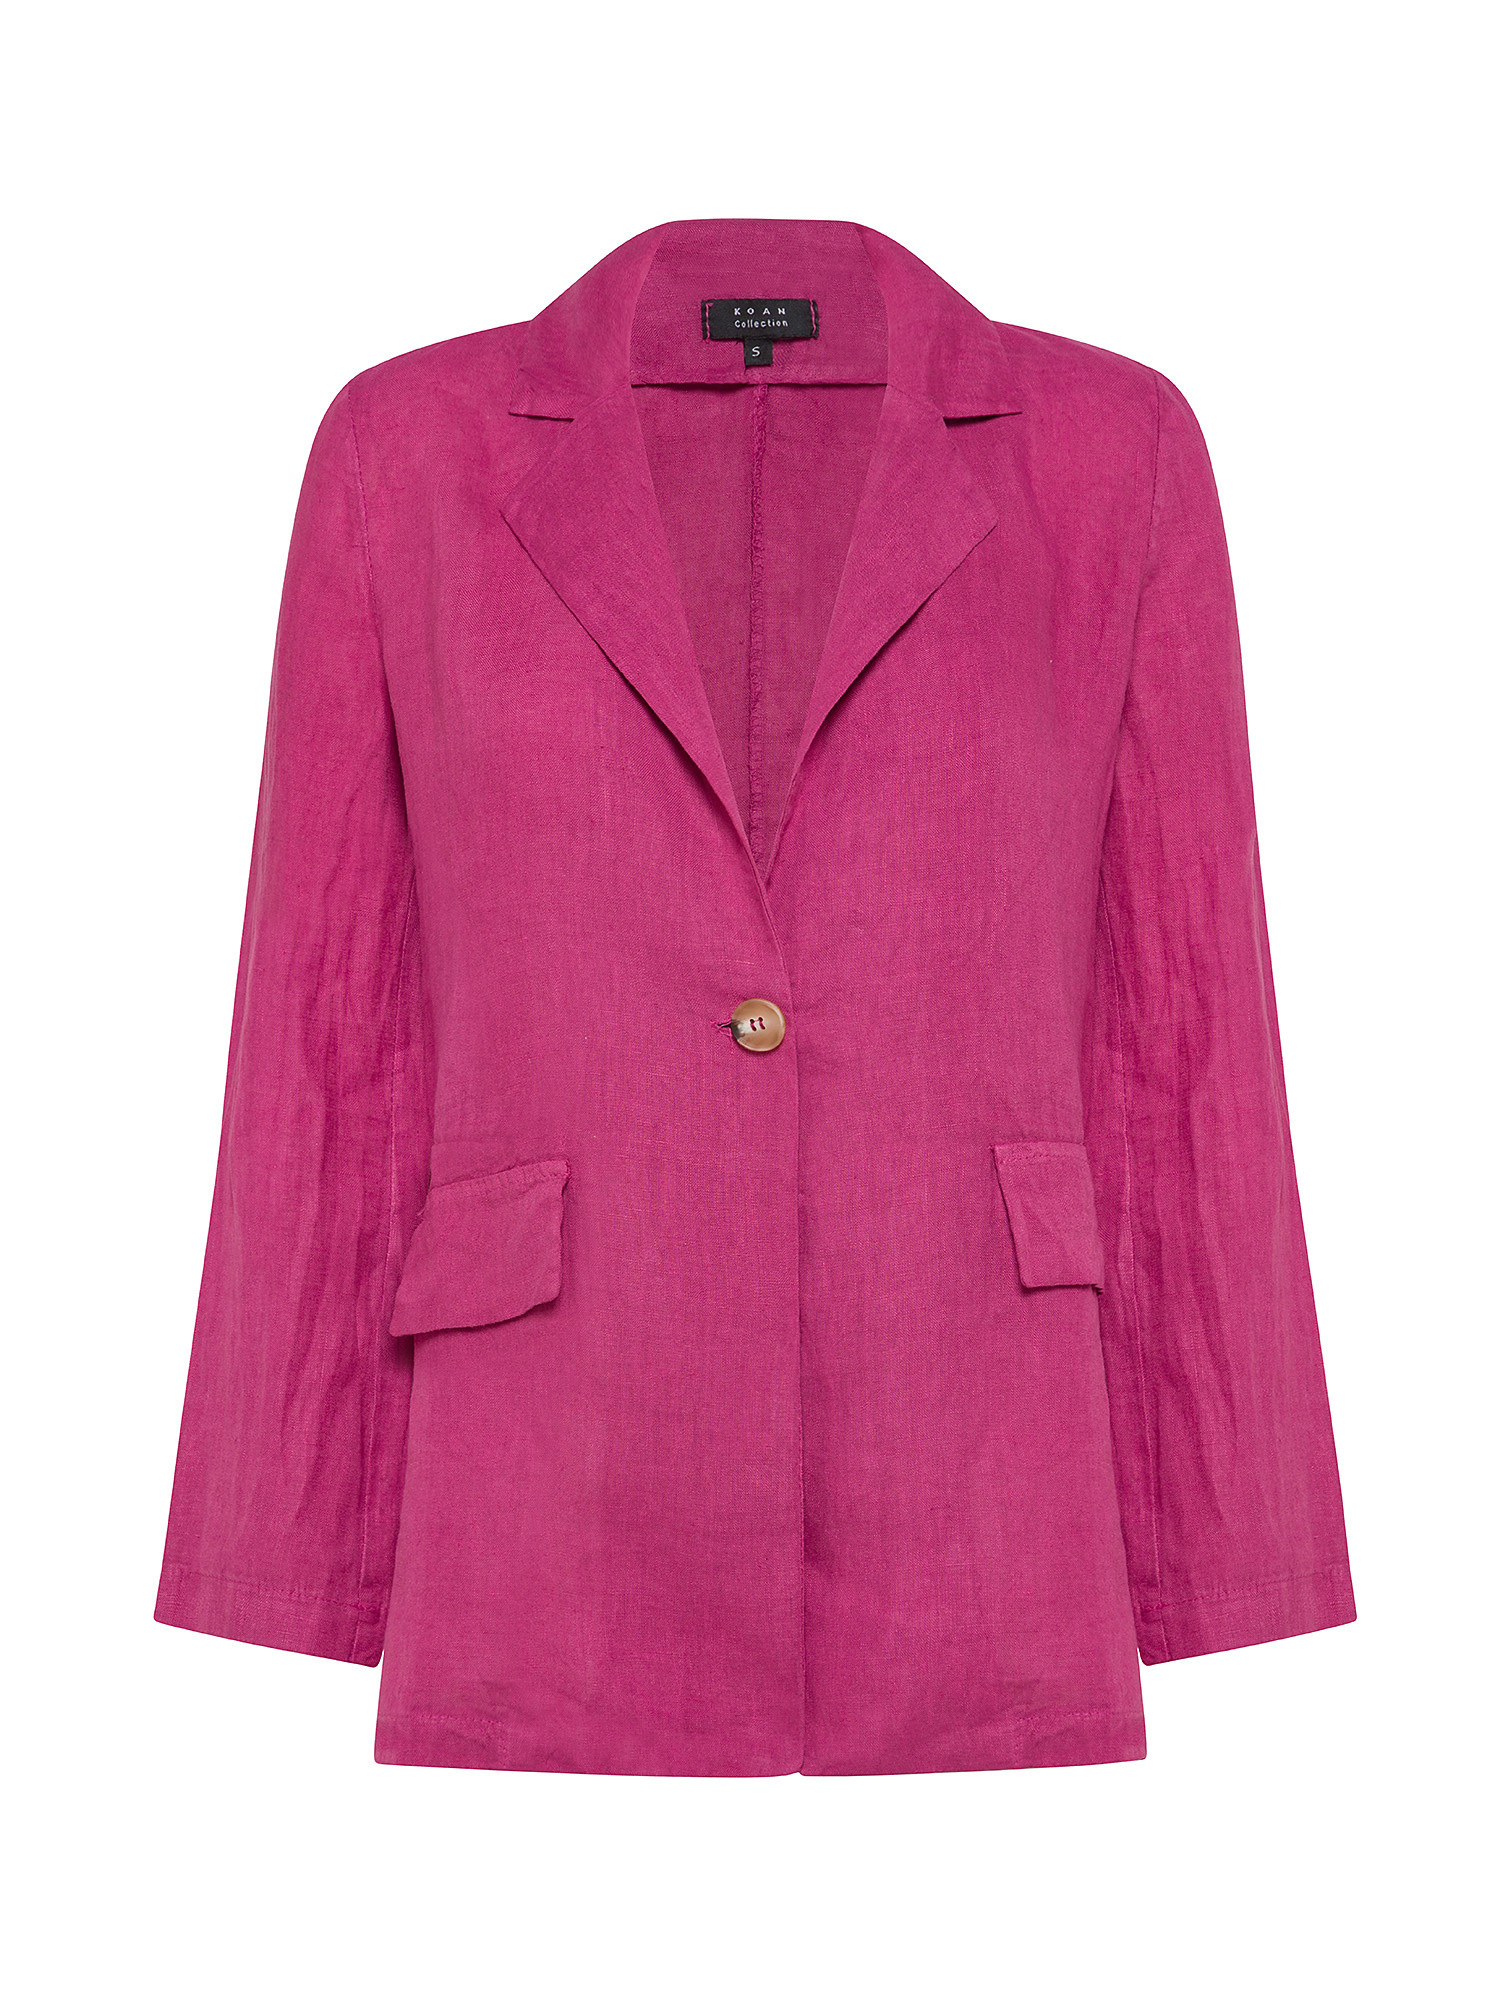 Koan - Classic linen jacket, Pink, large image number 0